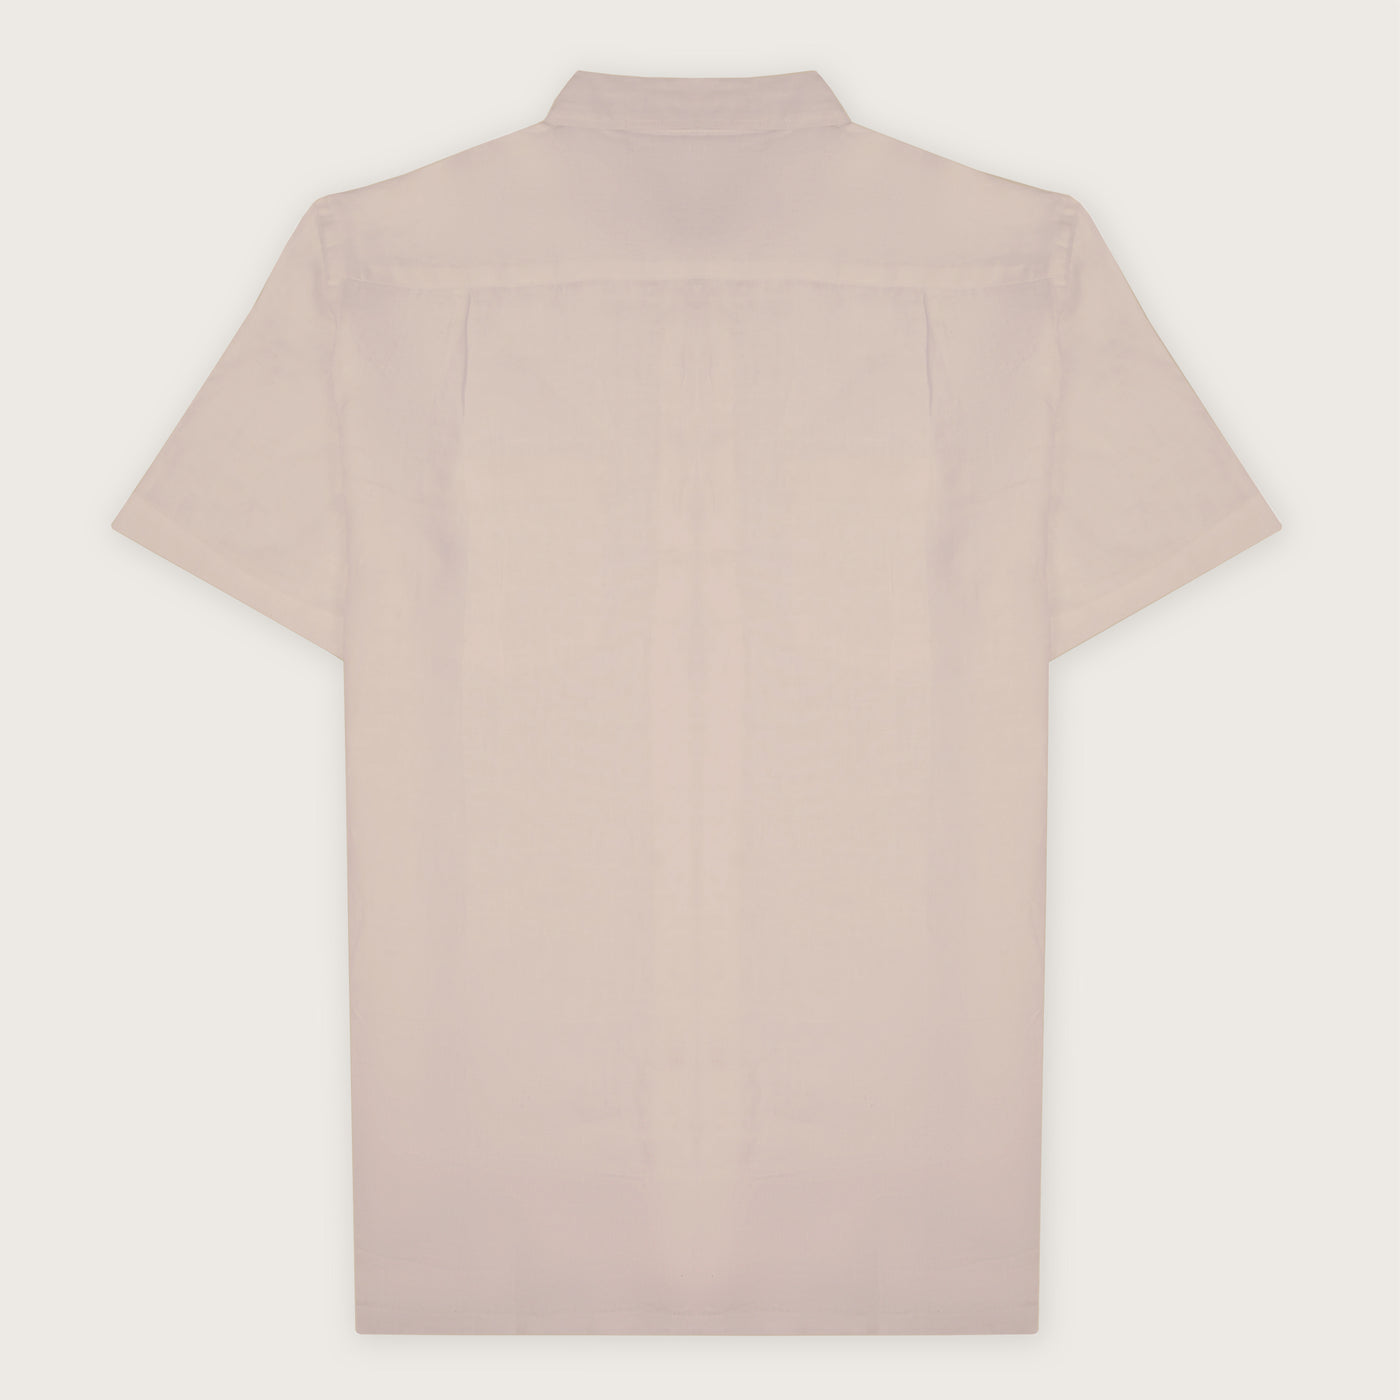 pure linen shirts & tops